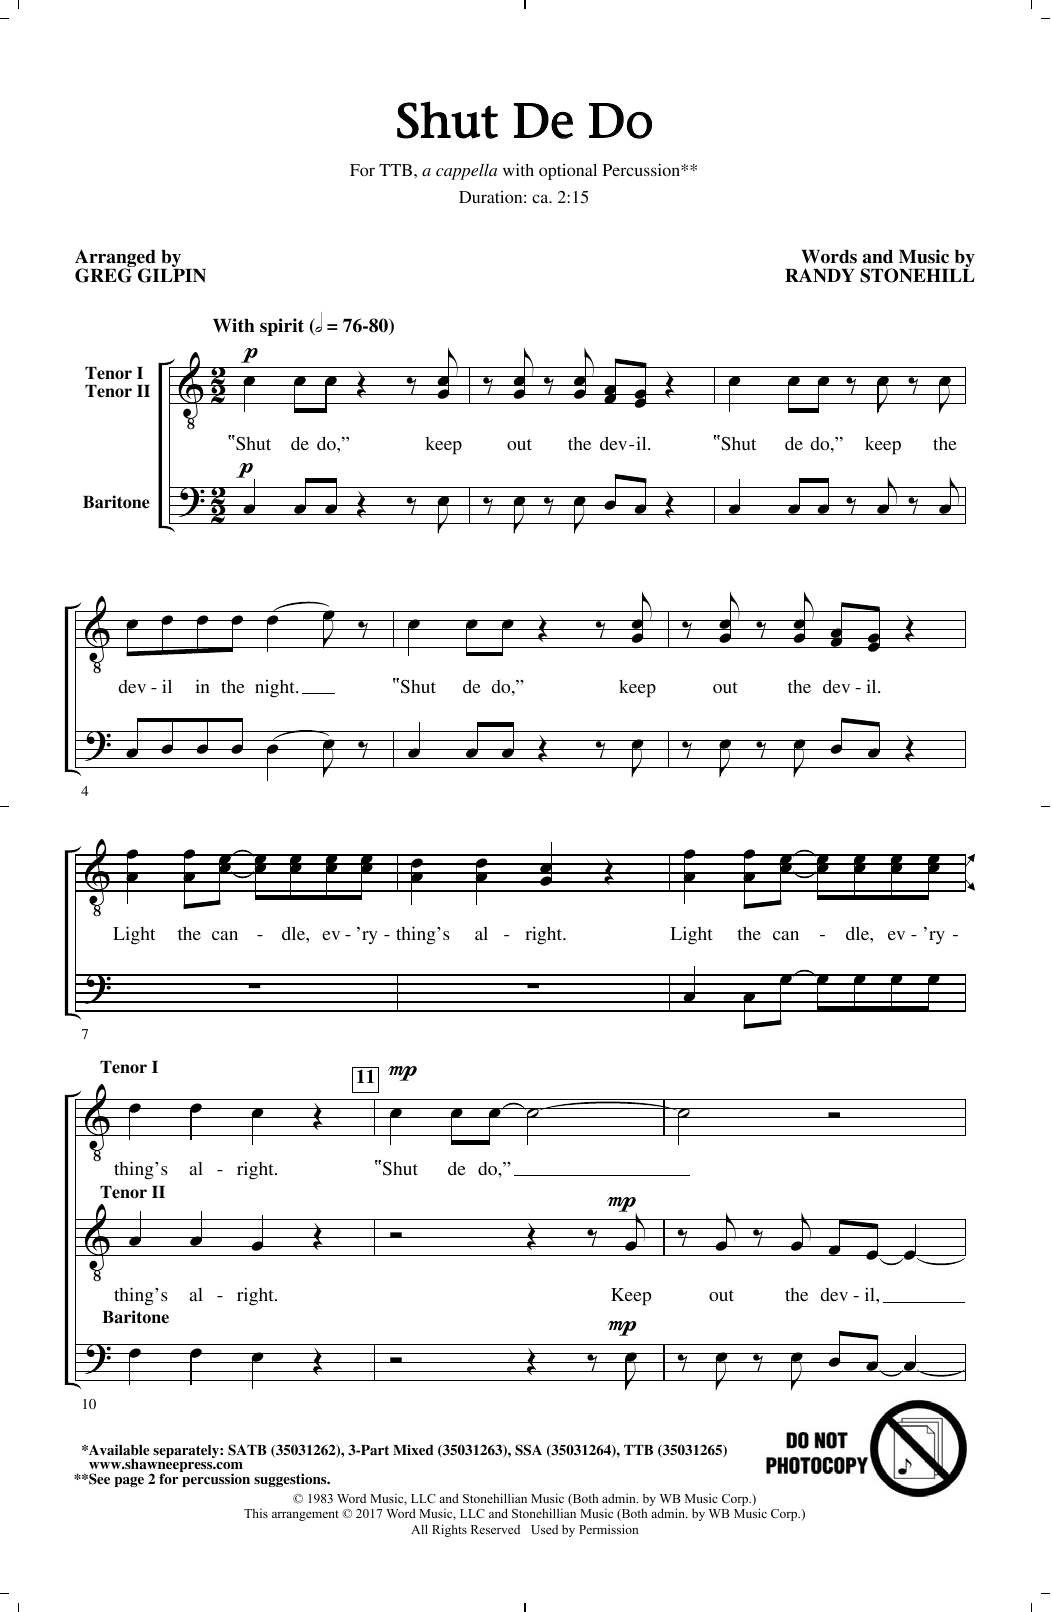 Randy Stonehill Shut de Do (arr. Greg Gilpin) Sheet Music Notes & Chords for SATB - Download or Print PDF